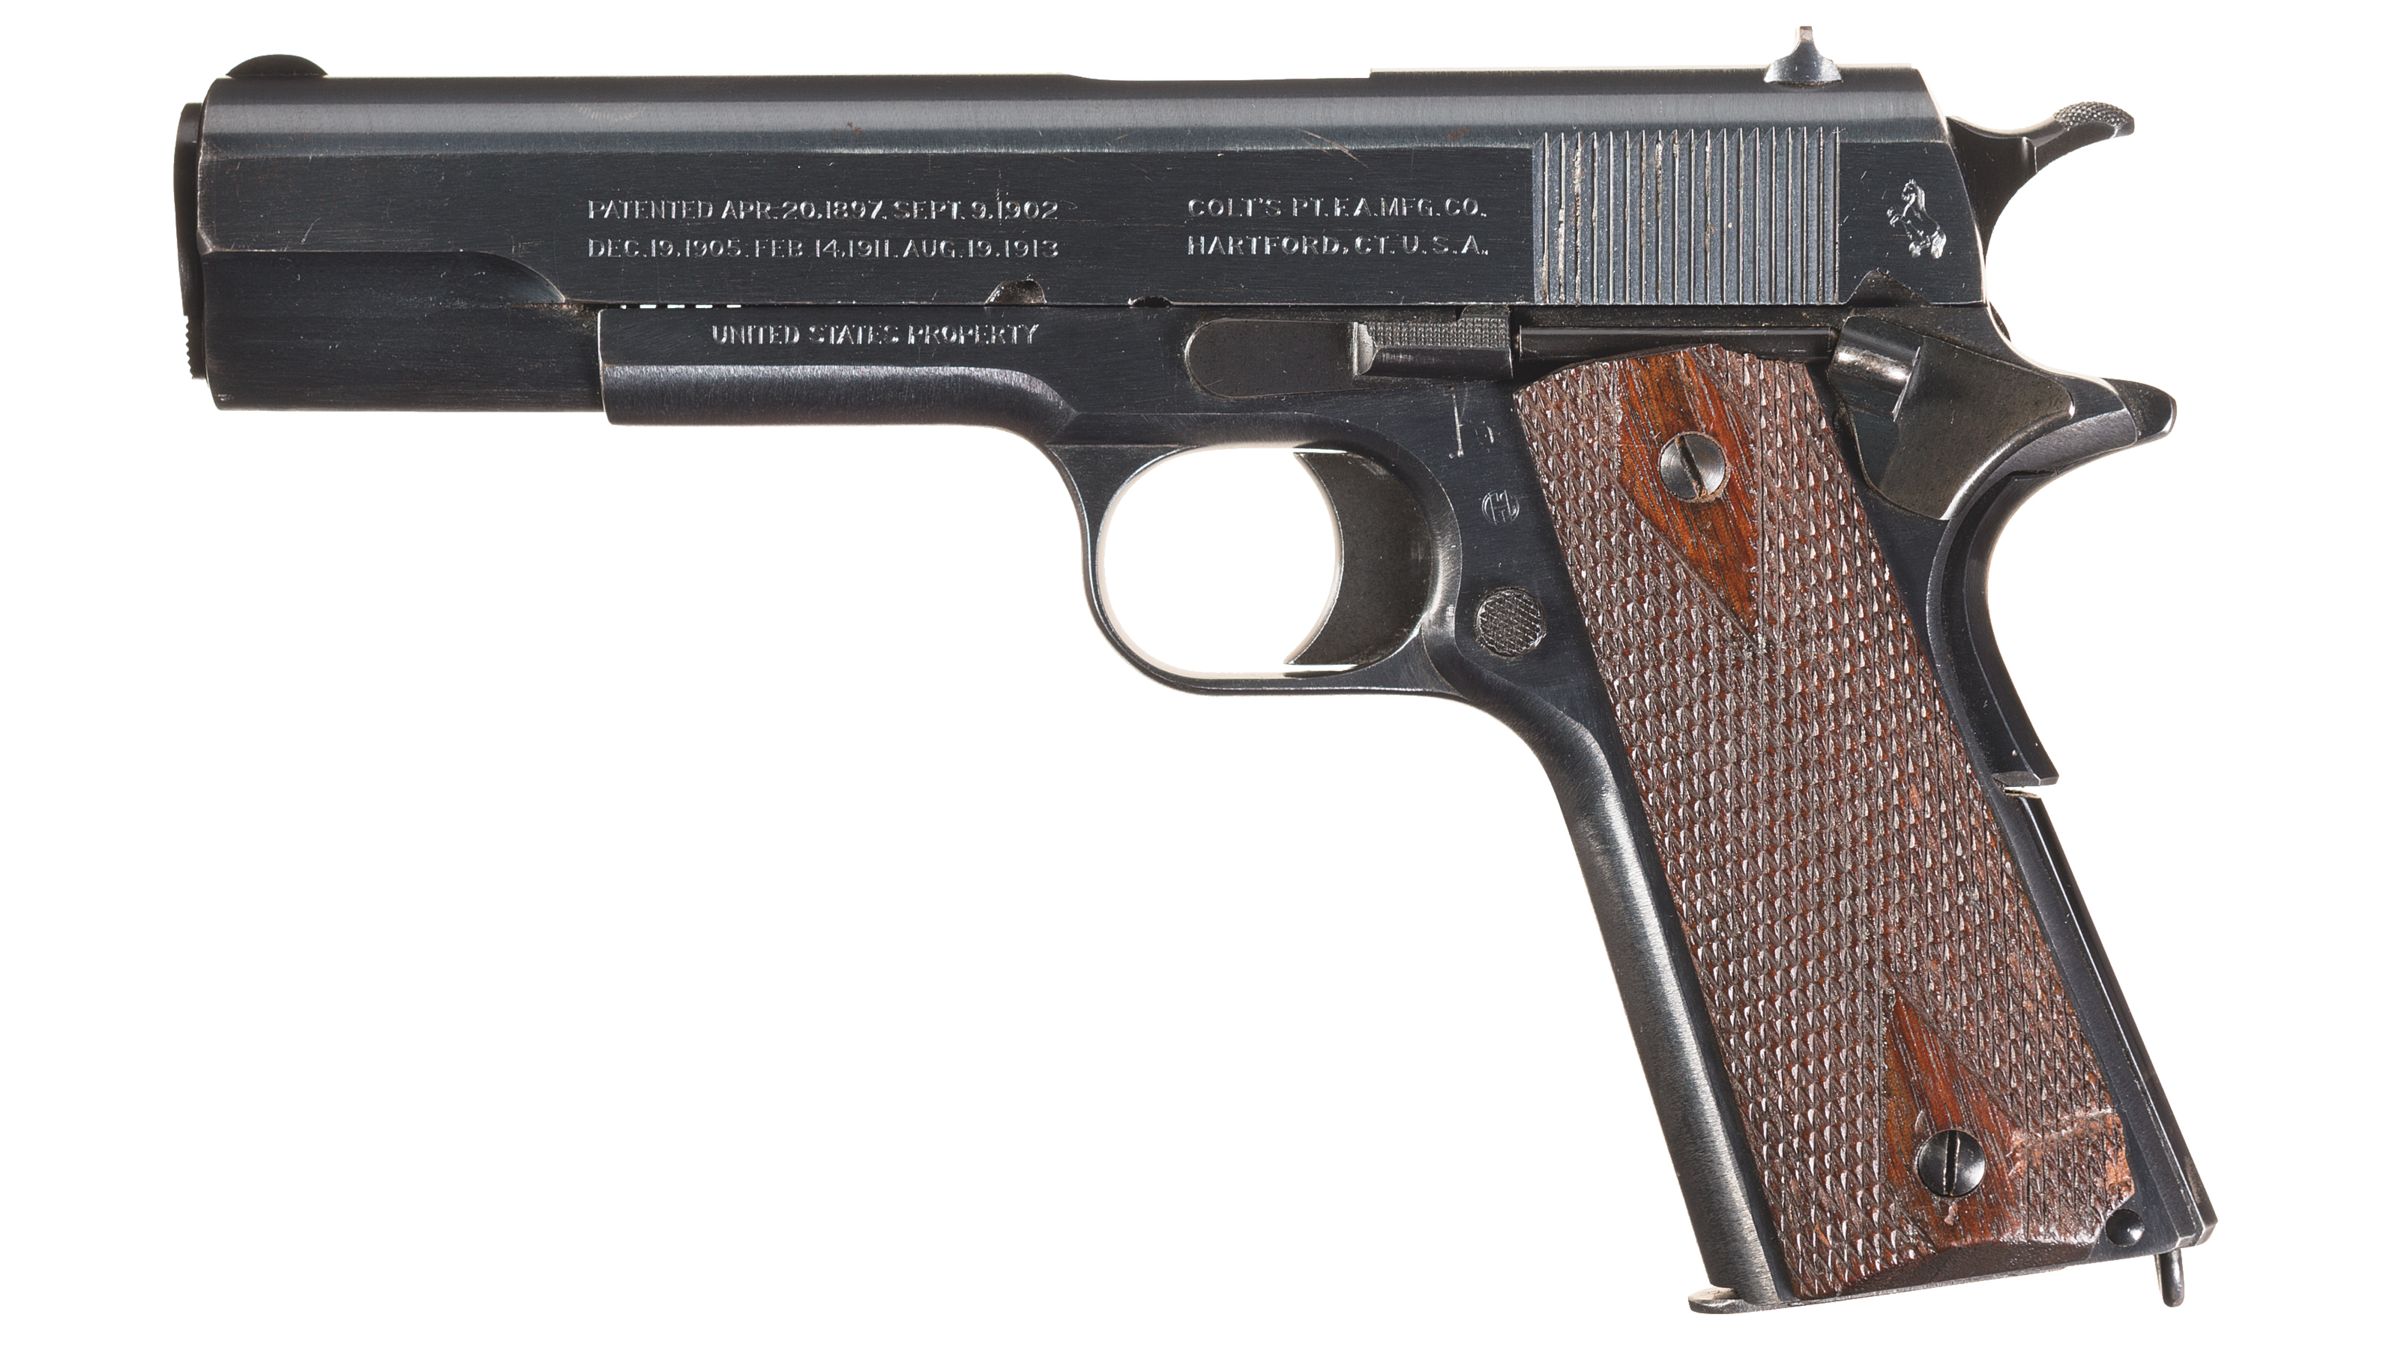 Exceptional Colt Usmc 1911 Pistol With Usmc Holster Rock Island Auction 3815